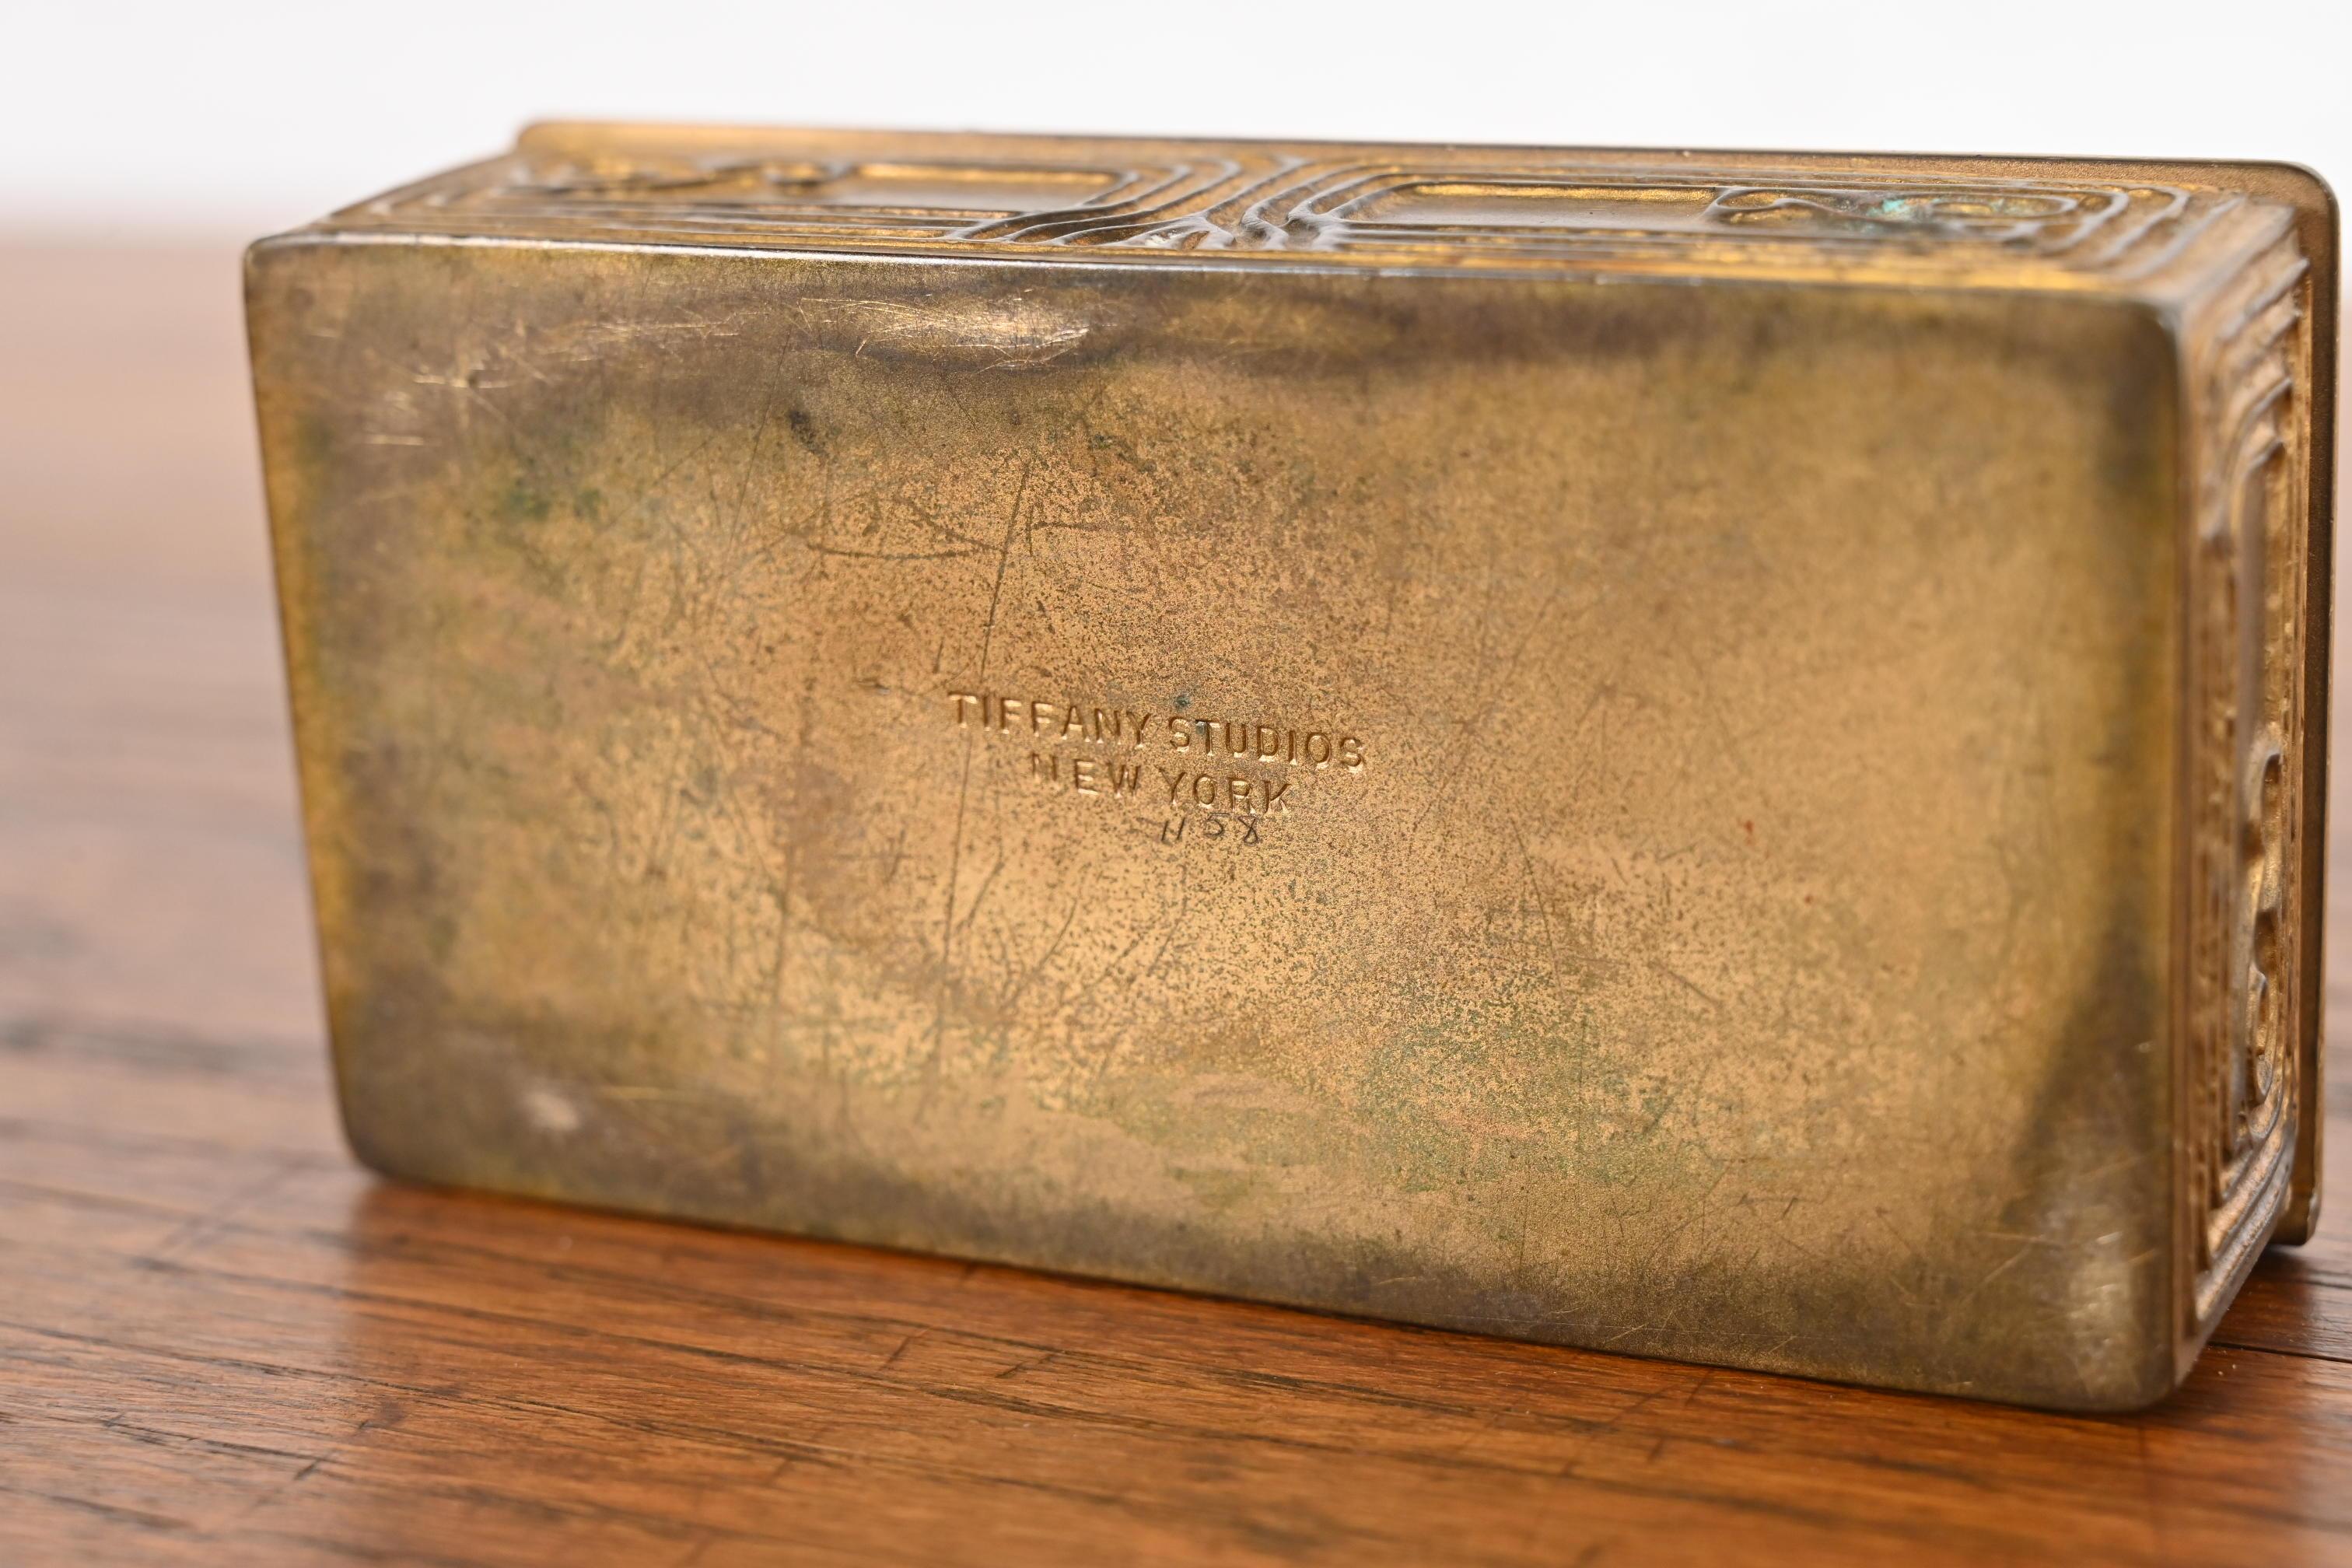 Tiffany Studios New York Bronze Doré and Abalone Stamp Box 9